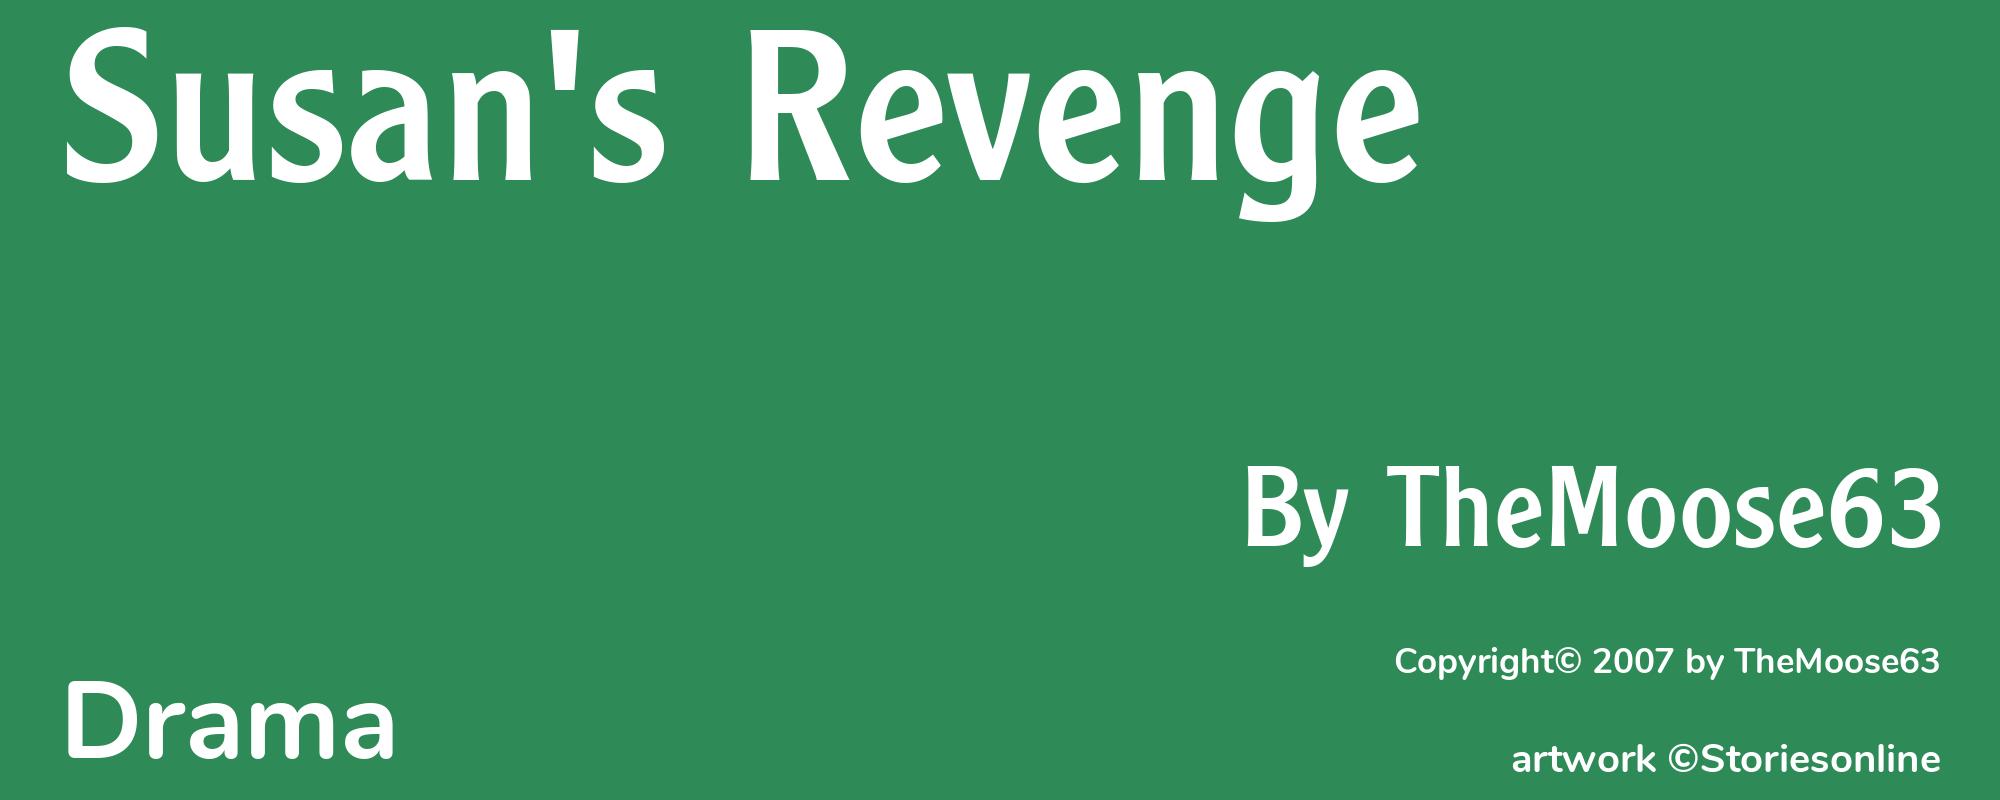 Susan's Revenge - Cover